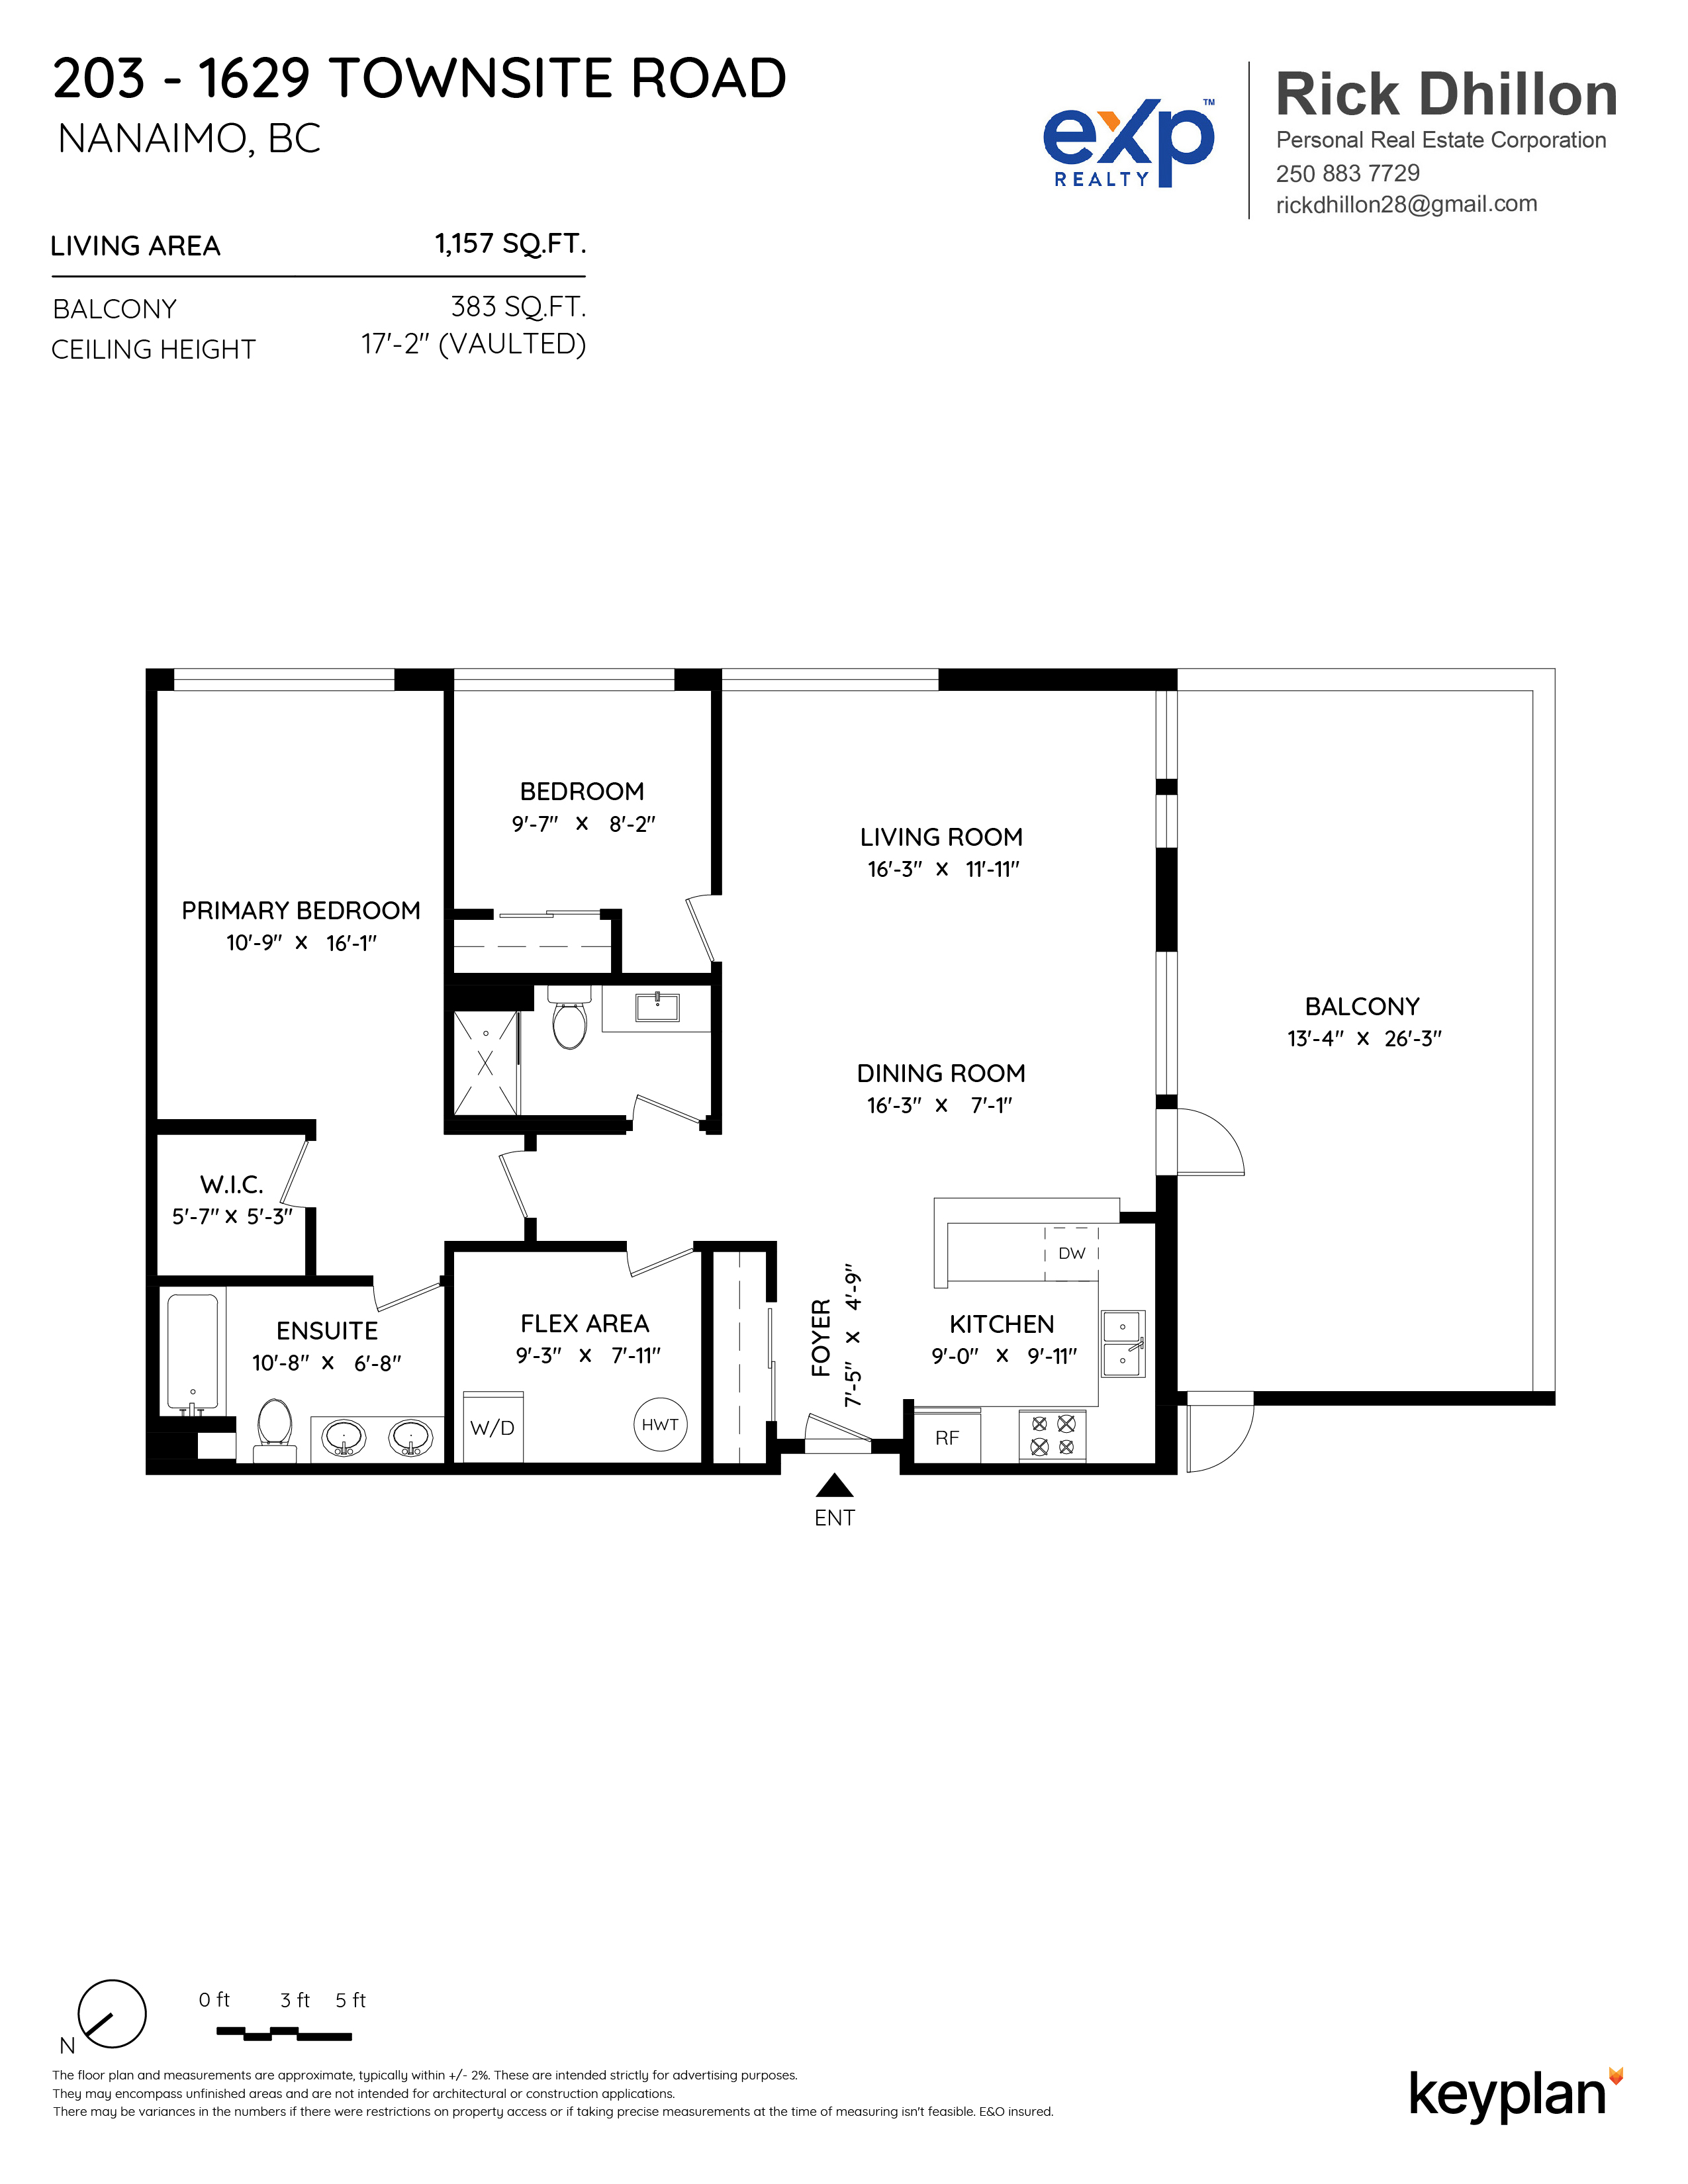 Rick Dhillon - Unit 203 - 1629 Townsite Road, Nanaimo, BC, Canada | Floor Plan 1